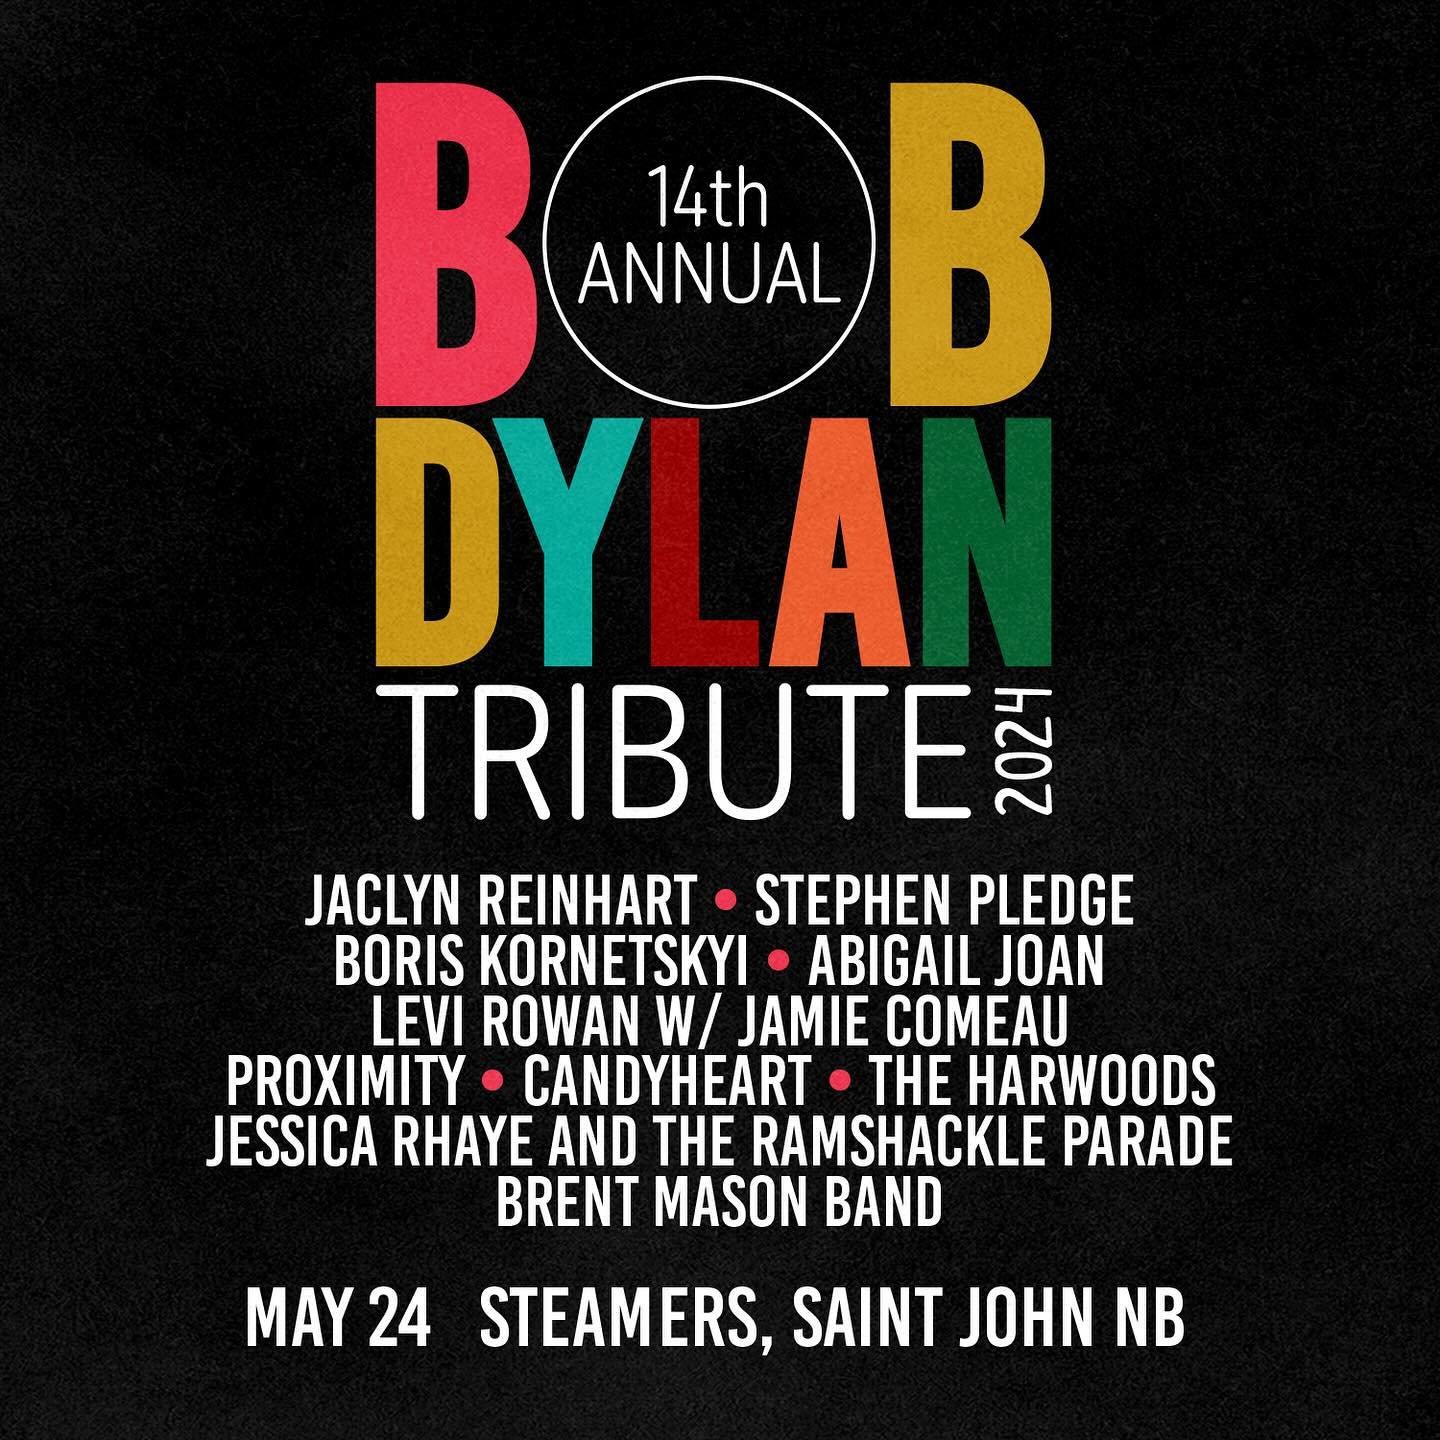 Bob Dylan Tribute show this Friday, May 24th, 7:30pm at Steamers in Saint John - only a few tickets left! 😎

#bobdylantributeshow @brentmason1984 @jaclynreinhartmusic @abigailjoanmusic @_jamiecomeau @levi.rowan @billpreeper @ea_sandy_mackay @ceebray